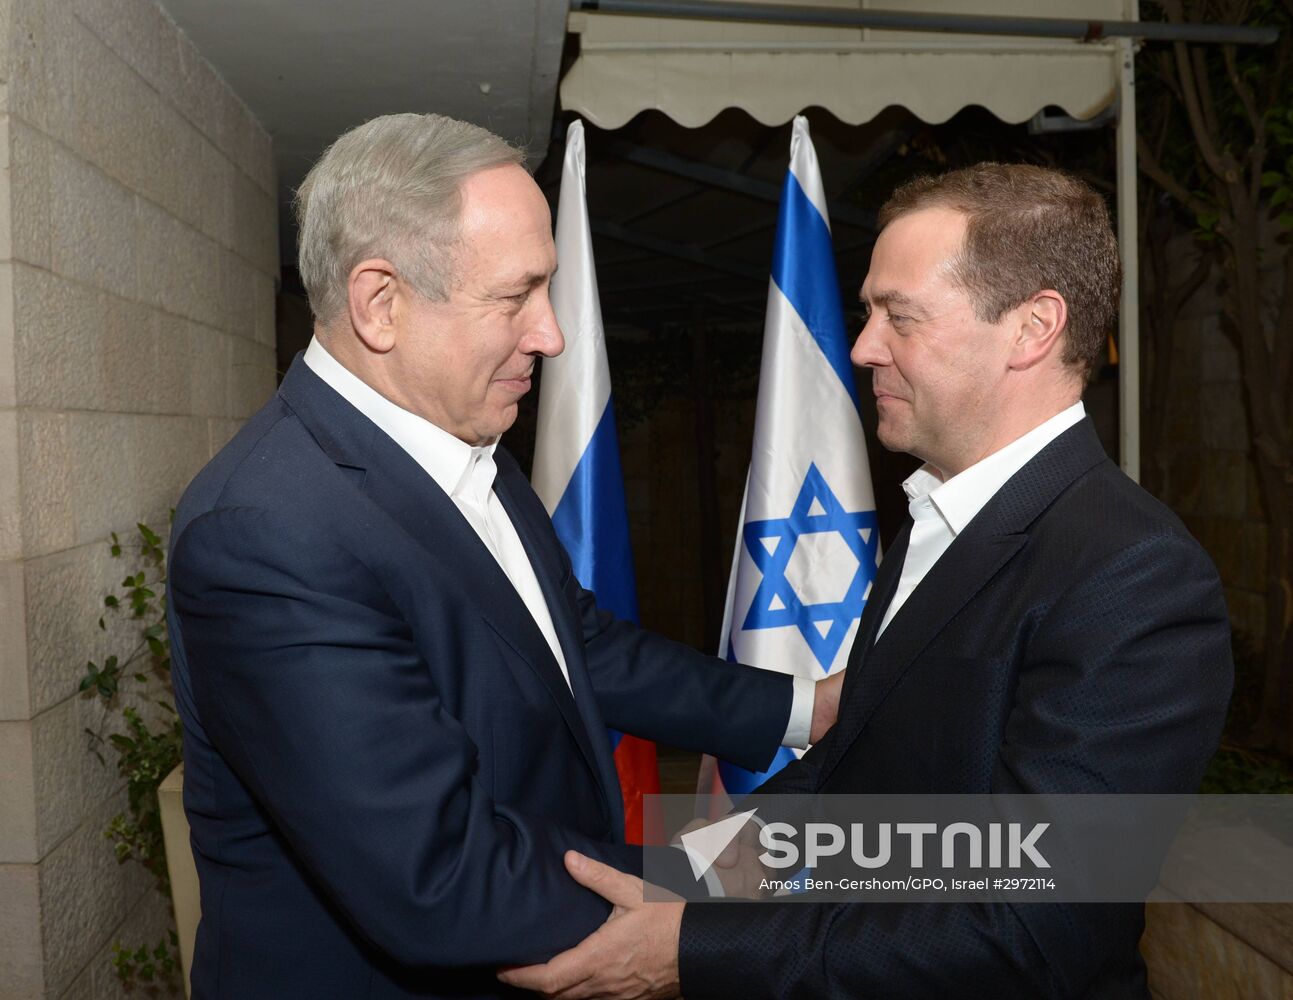 Prime Minister Dmitry Medvedev's official visit to Israel